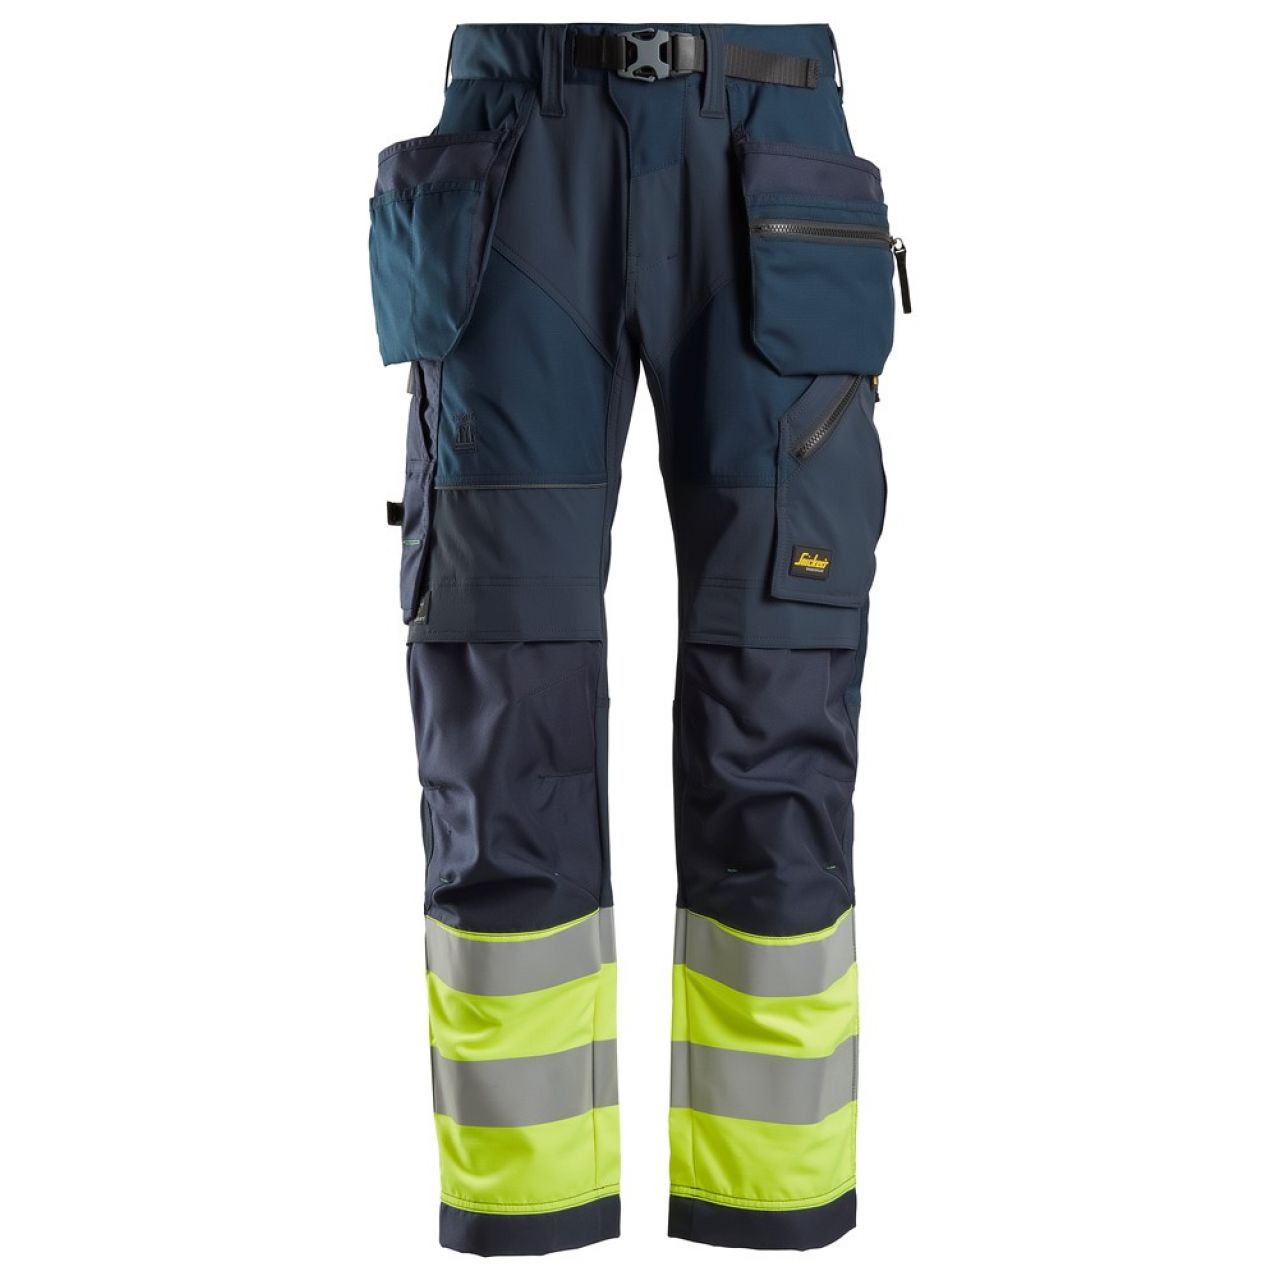 6931 Pantalones largos de trabajo de alta visibilidad clase 1 con bolsillos flotantes FlexiWork azul marino-amarillo talla 150